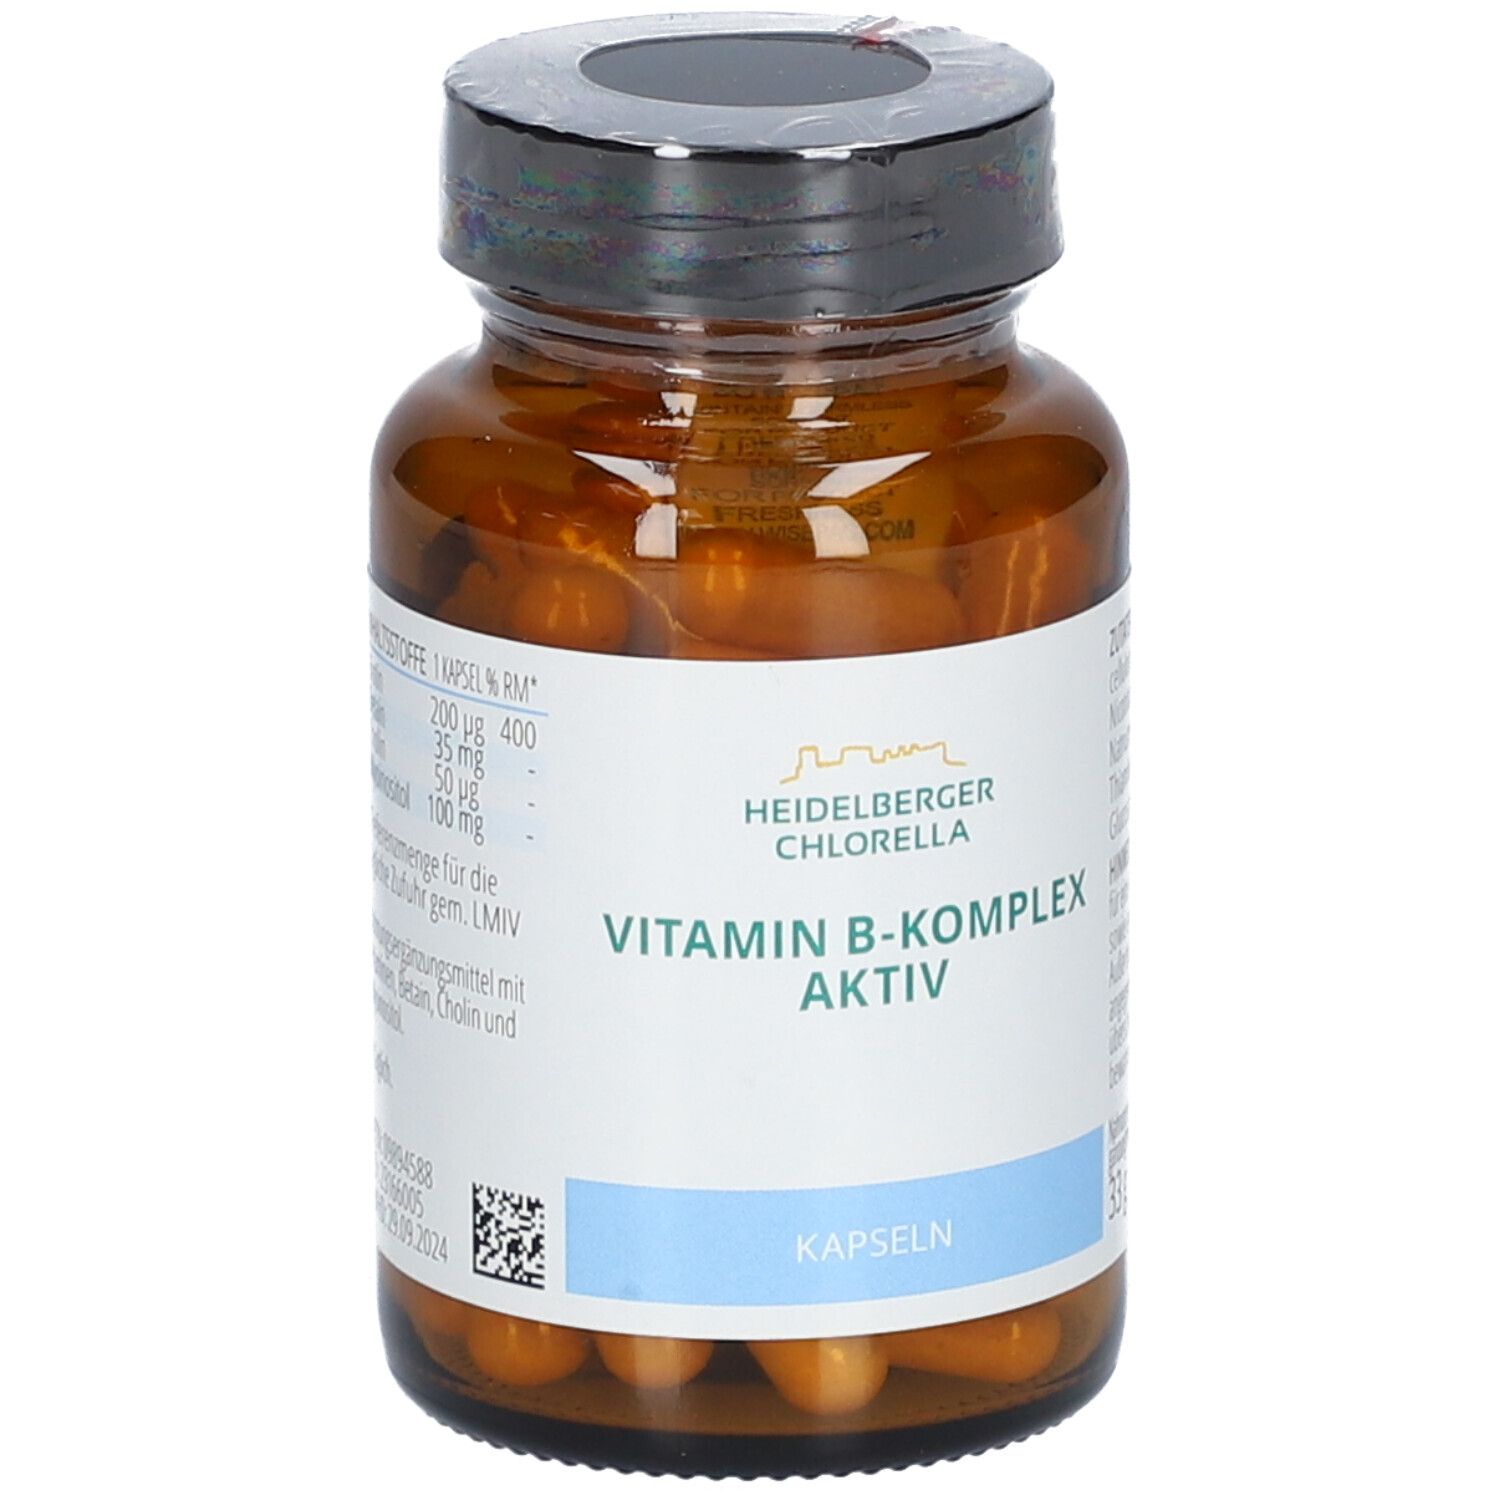 Heidelberger Chlorella® Vitamin B-Komplex aktiv